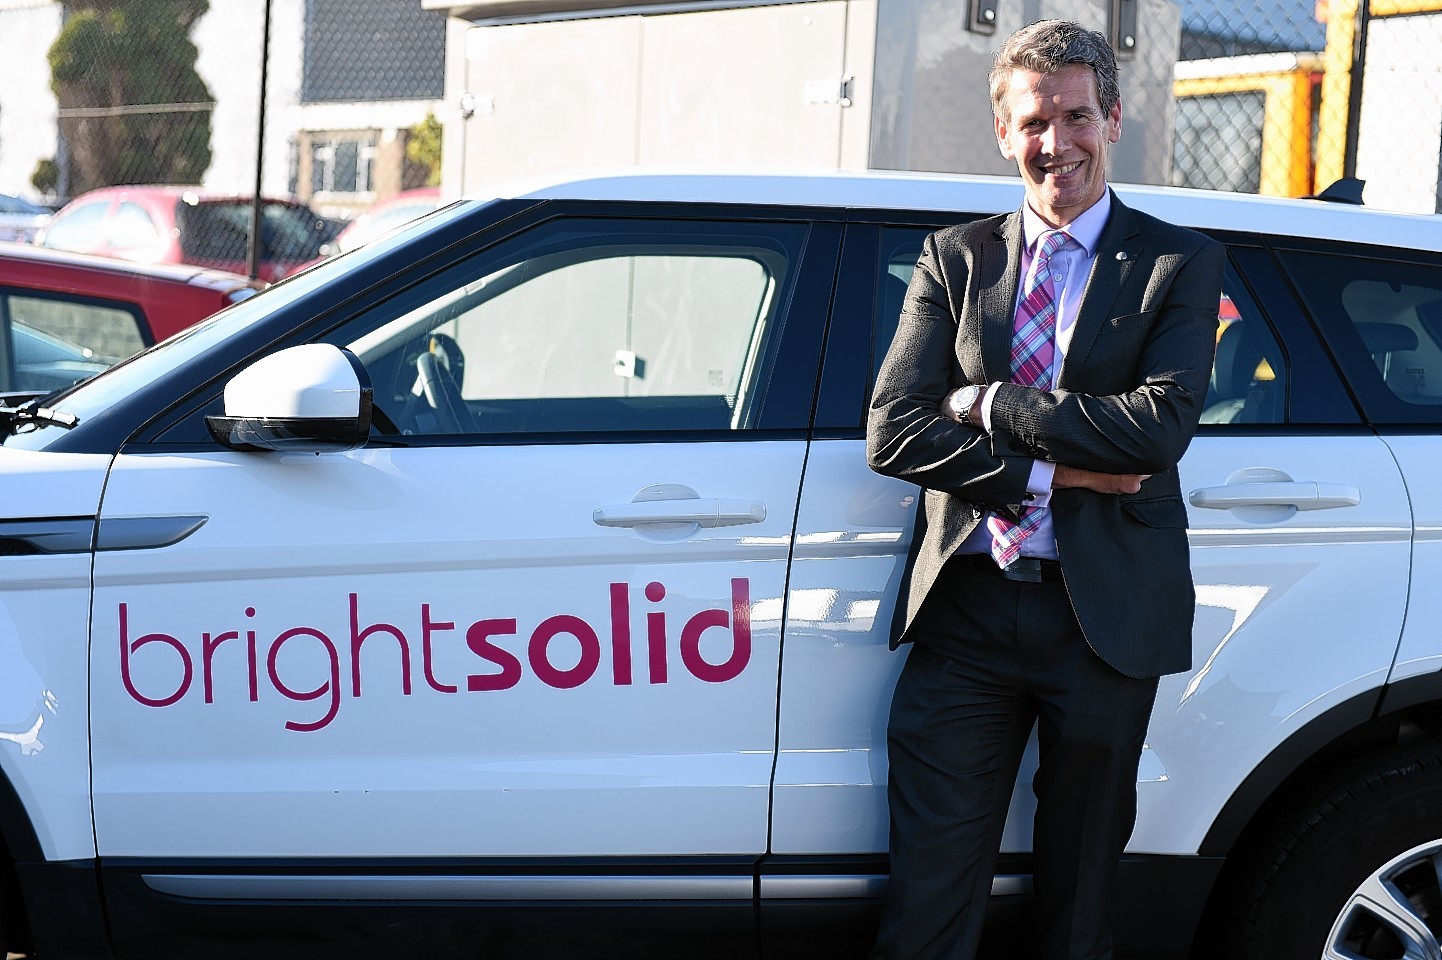 Brightsolid chief executive Richard Higgs